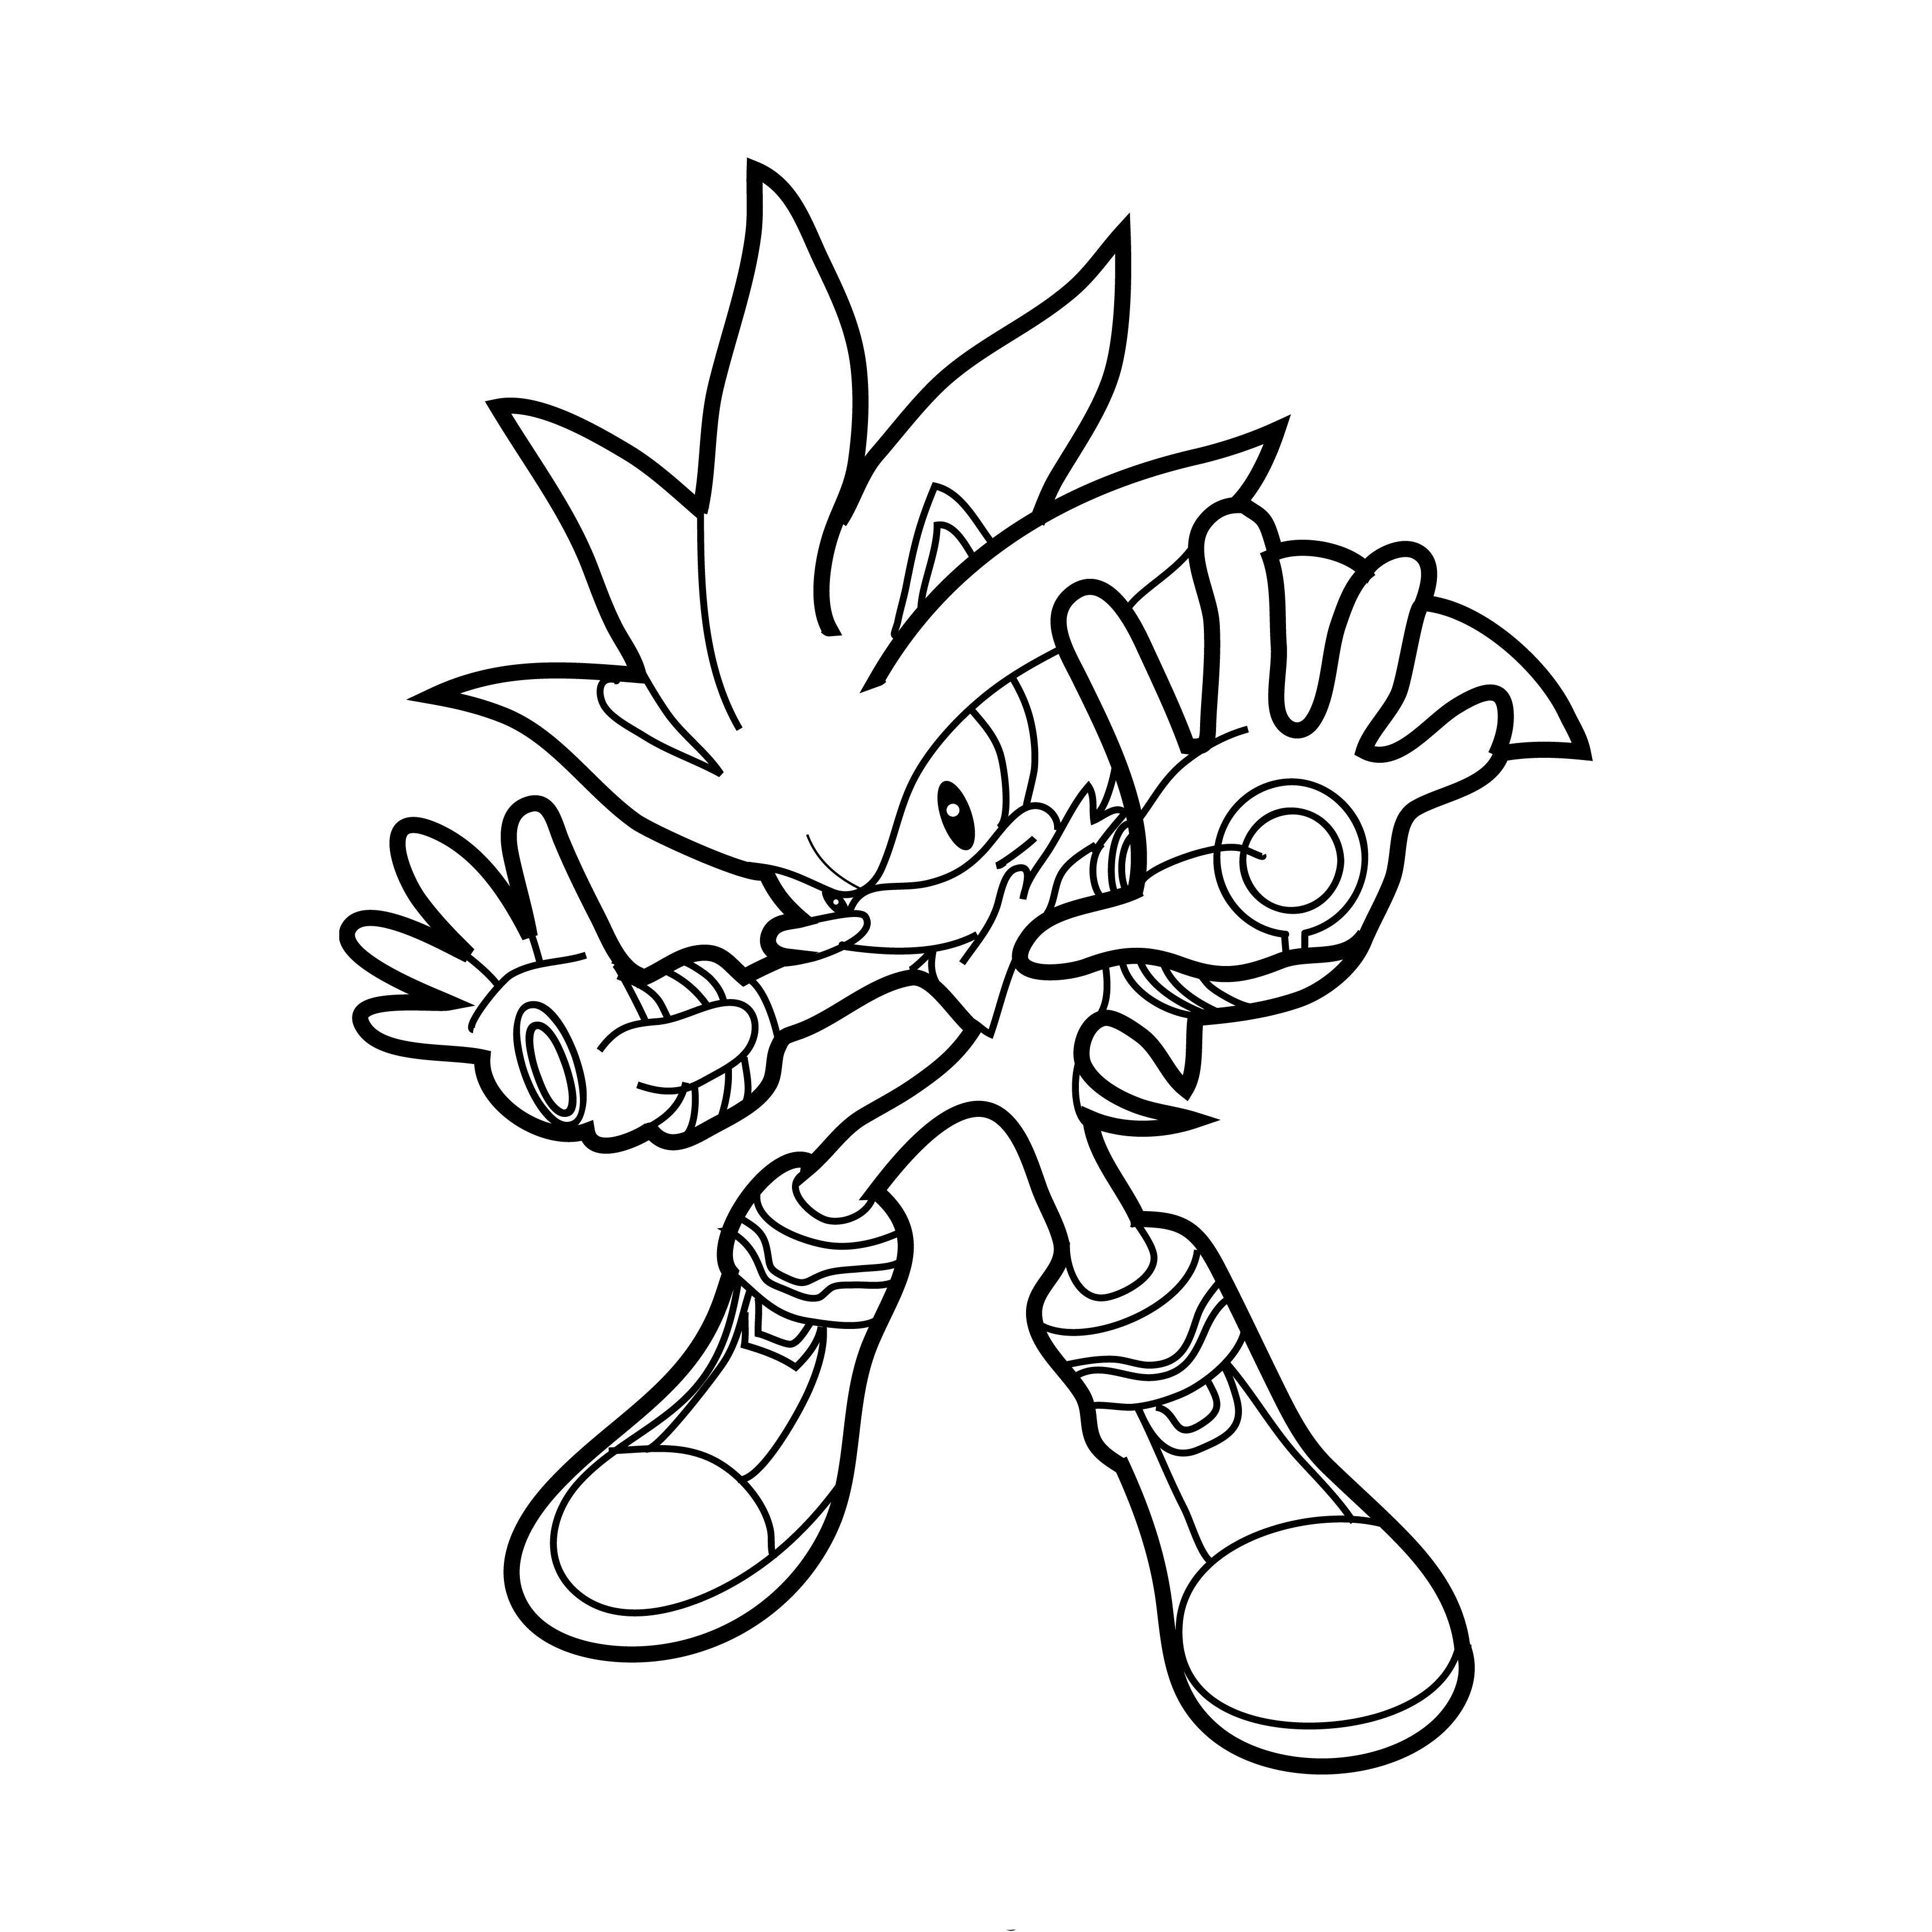 Super Sonic para colorir: 18 desenhos para pintar e se divertir